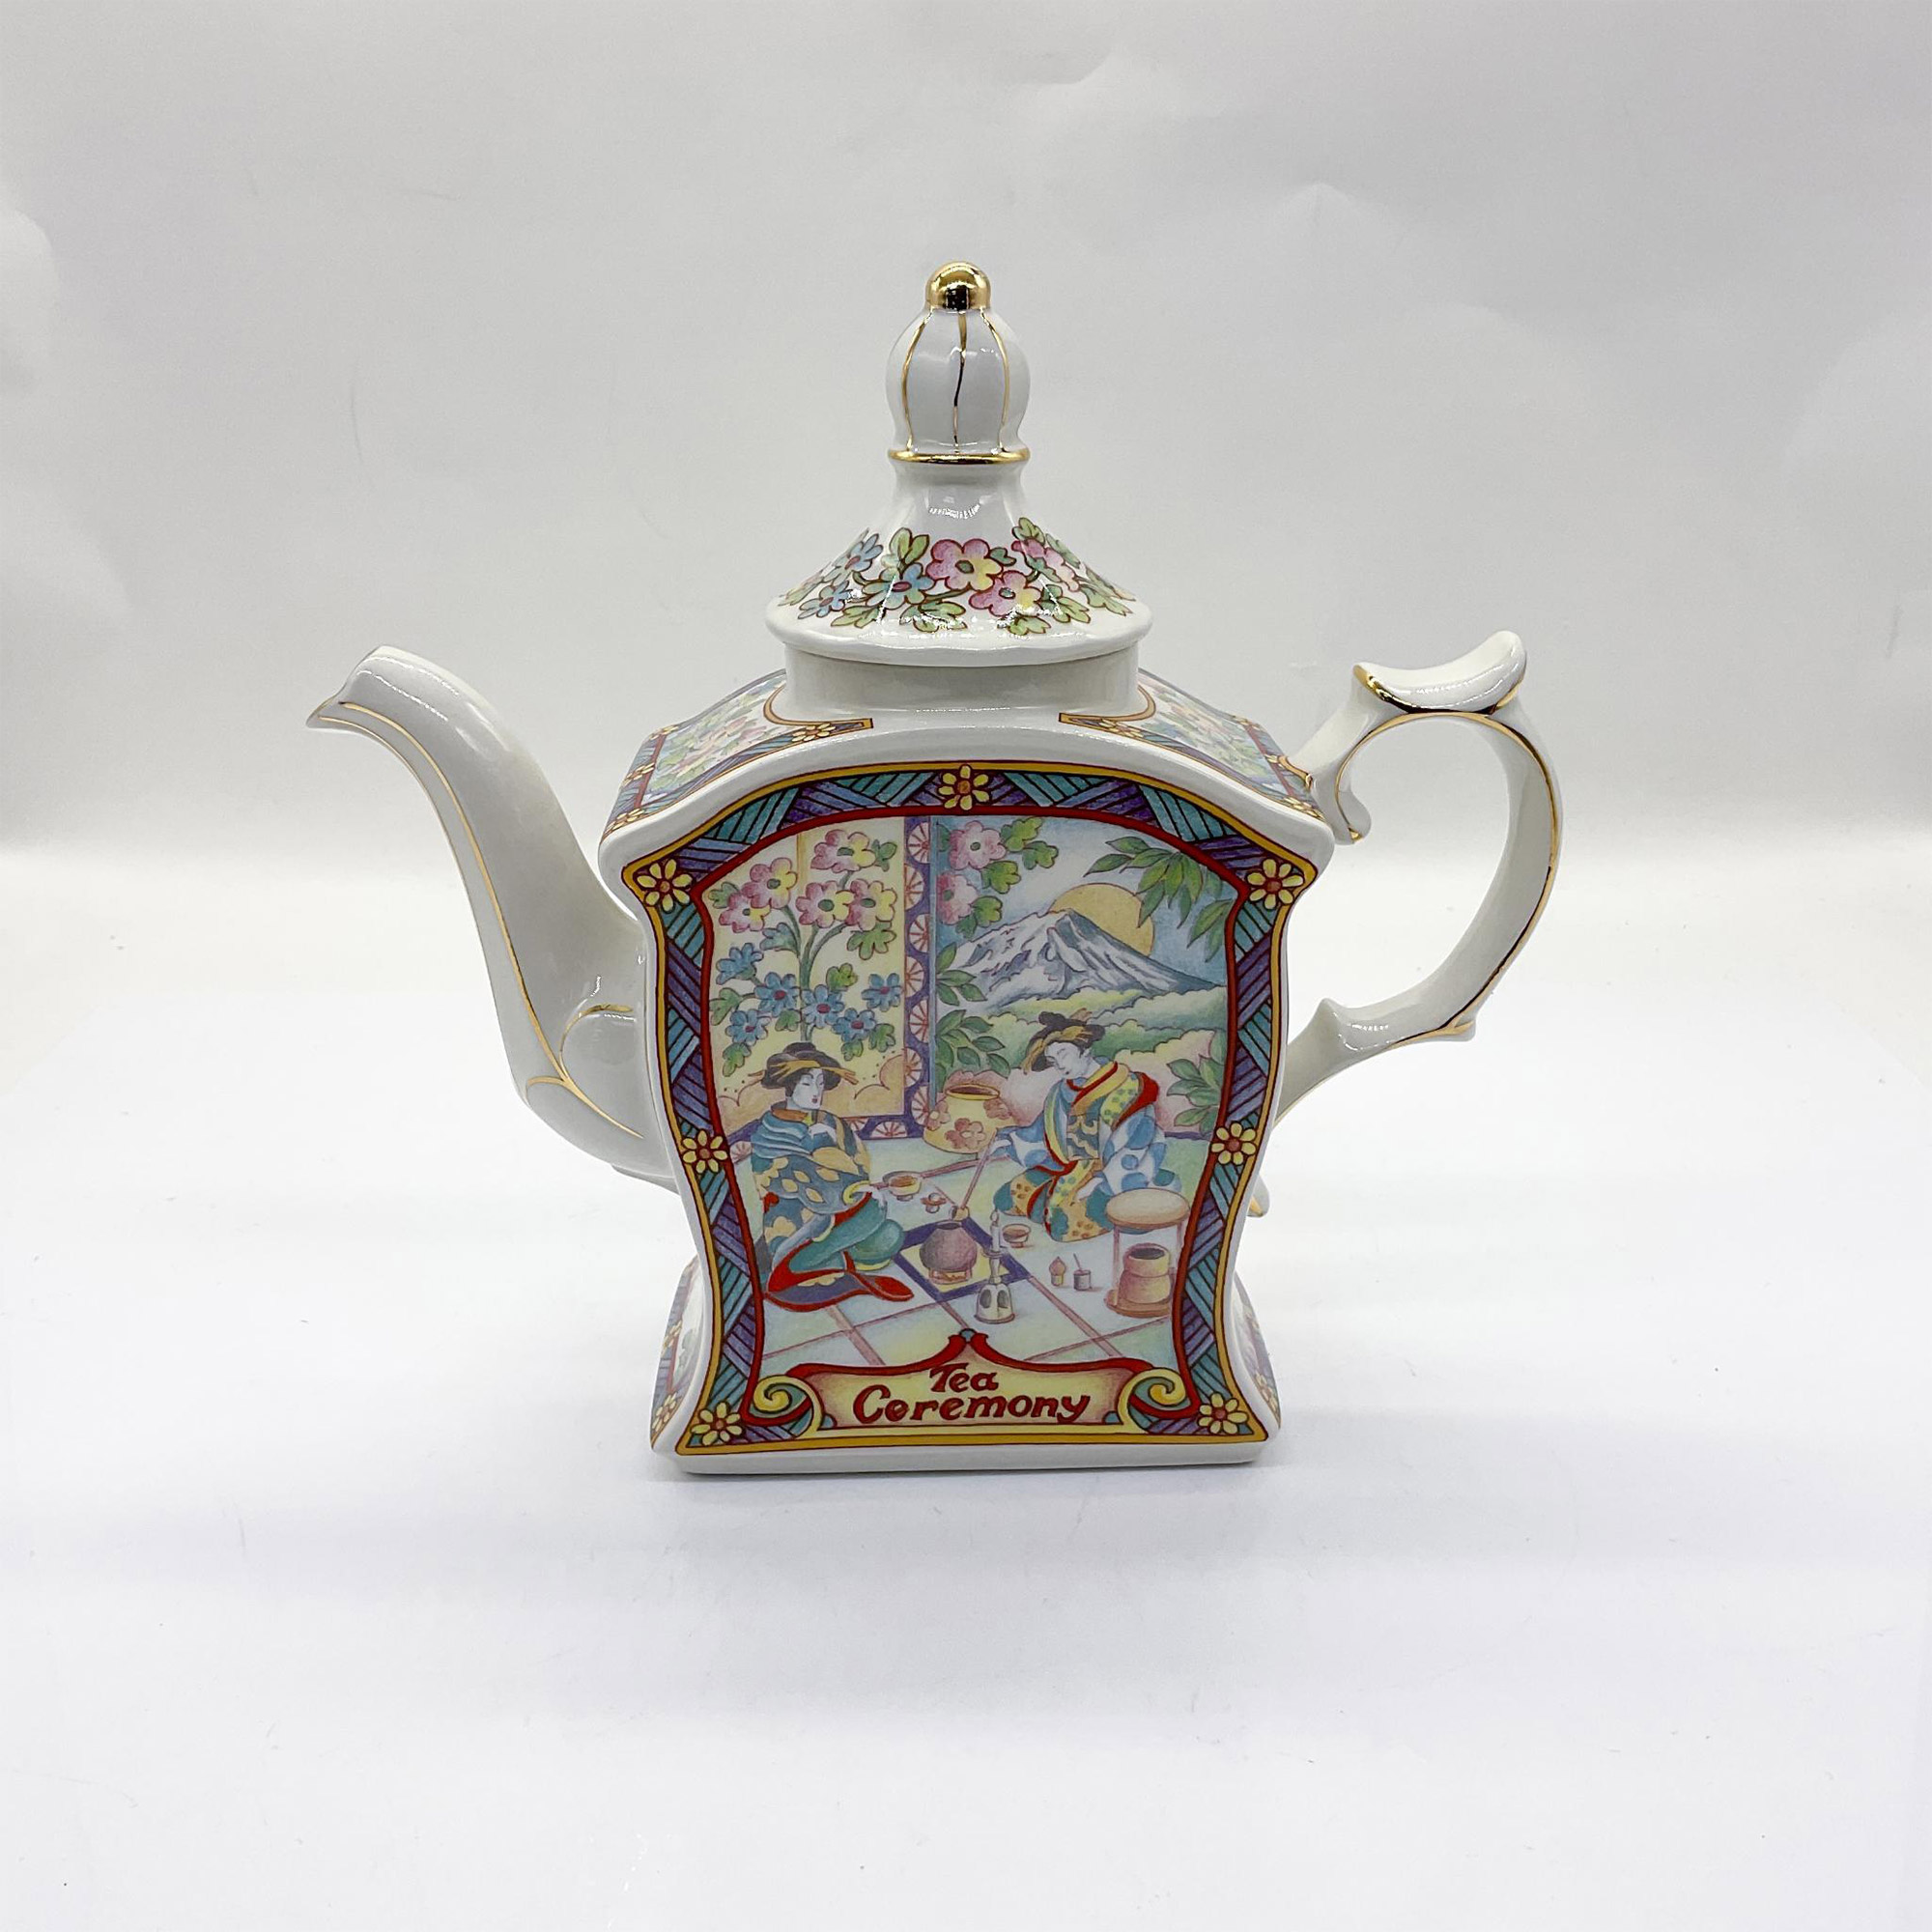 Sadler The World Of Tea Ceremony Tea Pot - Image 4 of 10